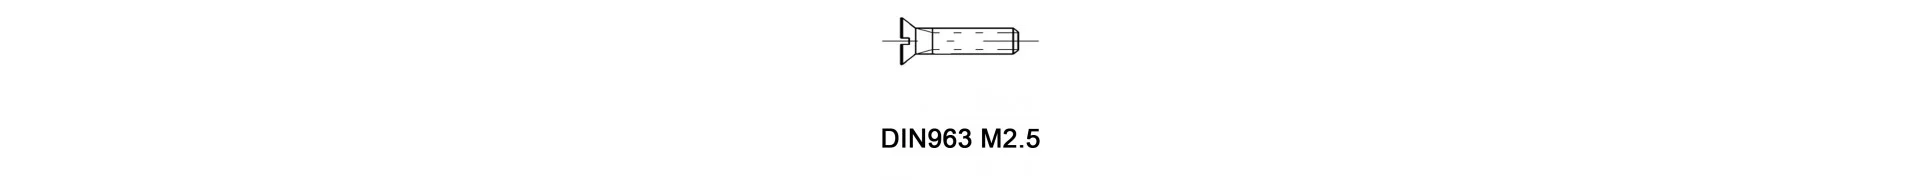 DIN963 M2.5